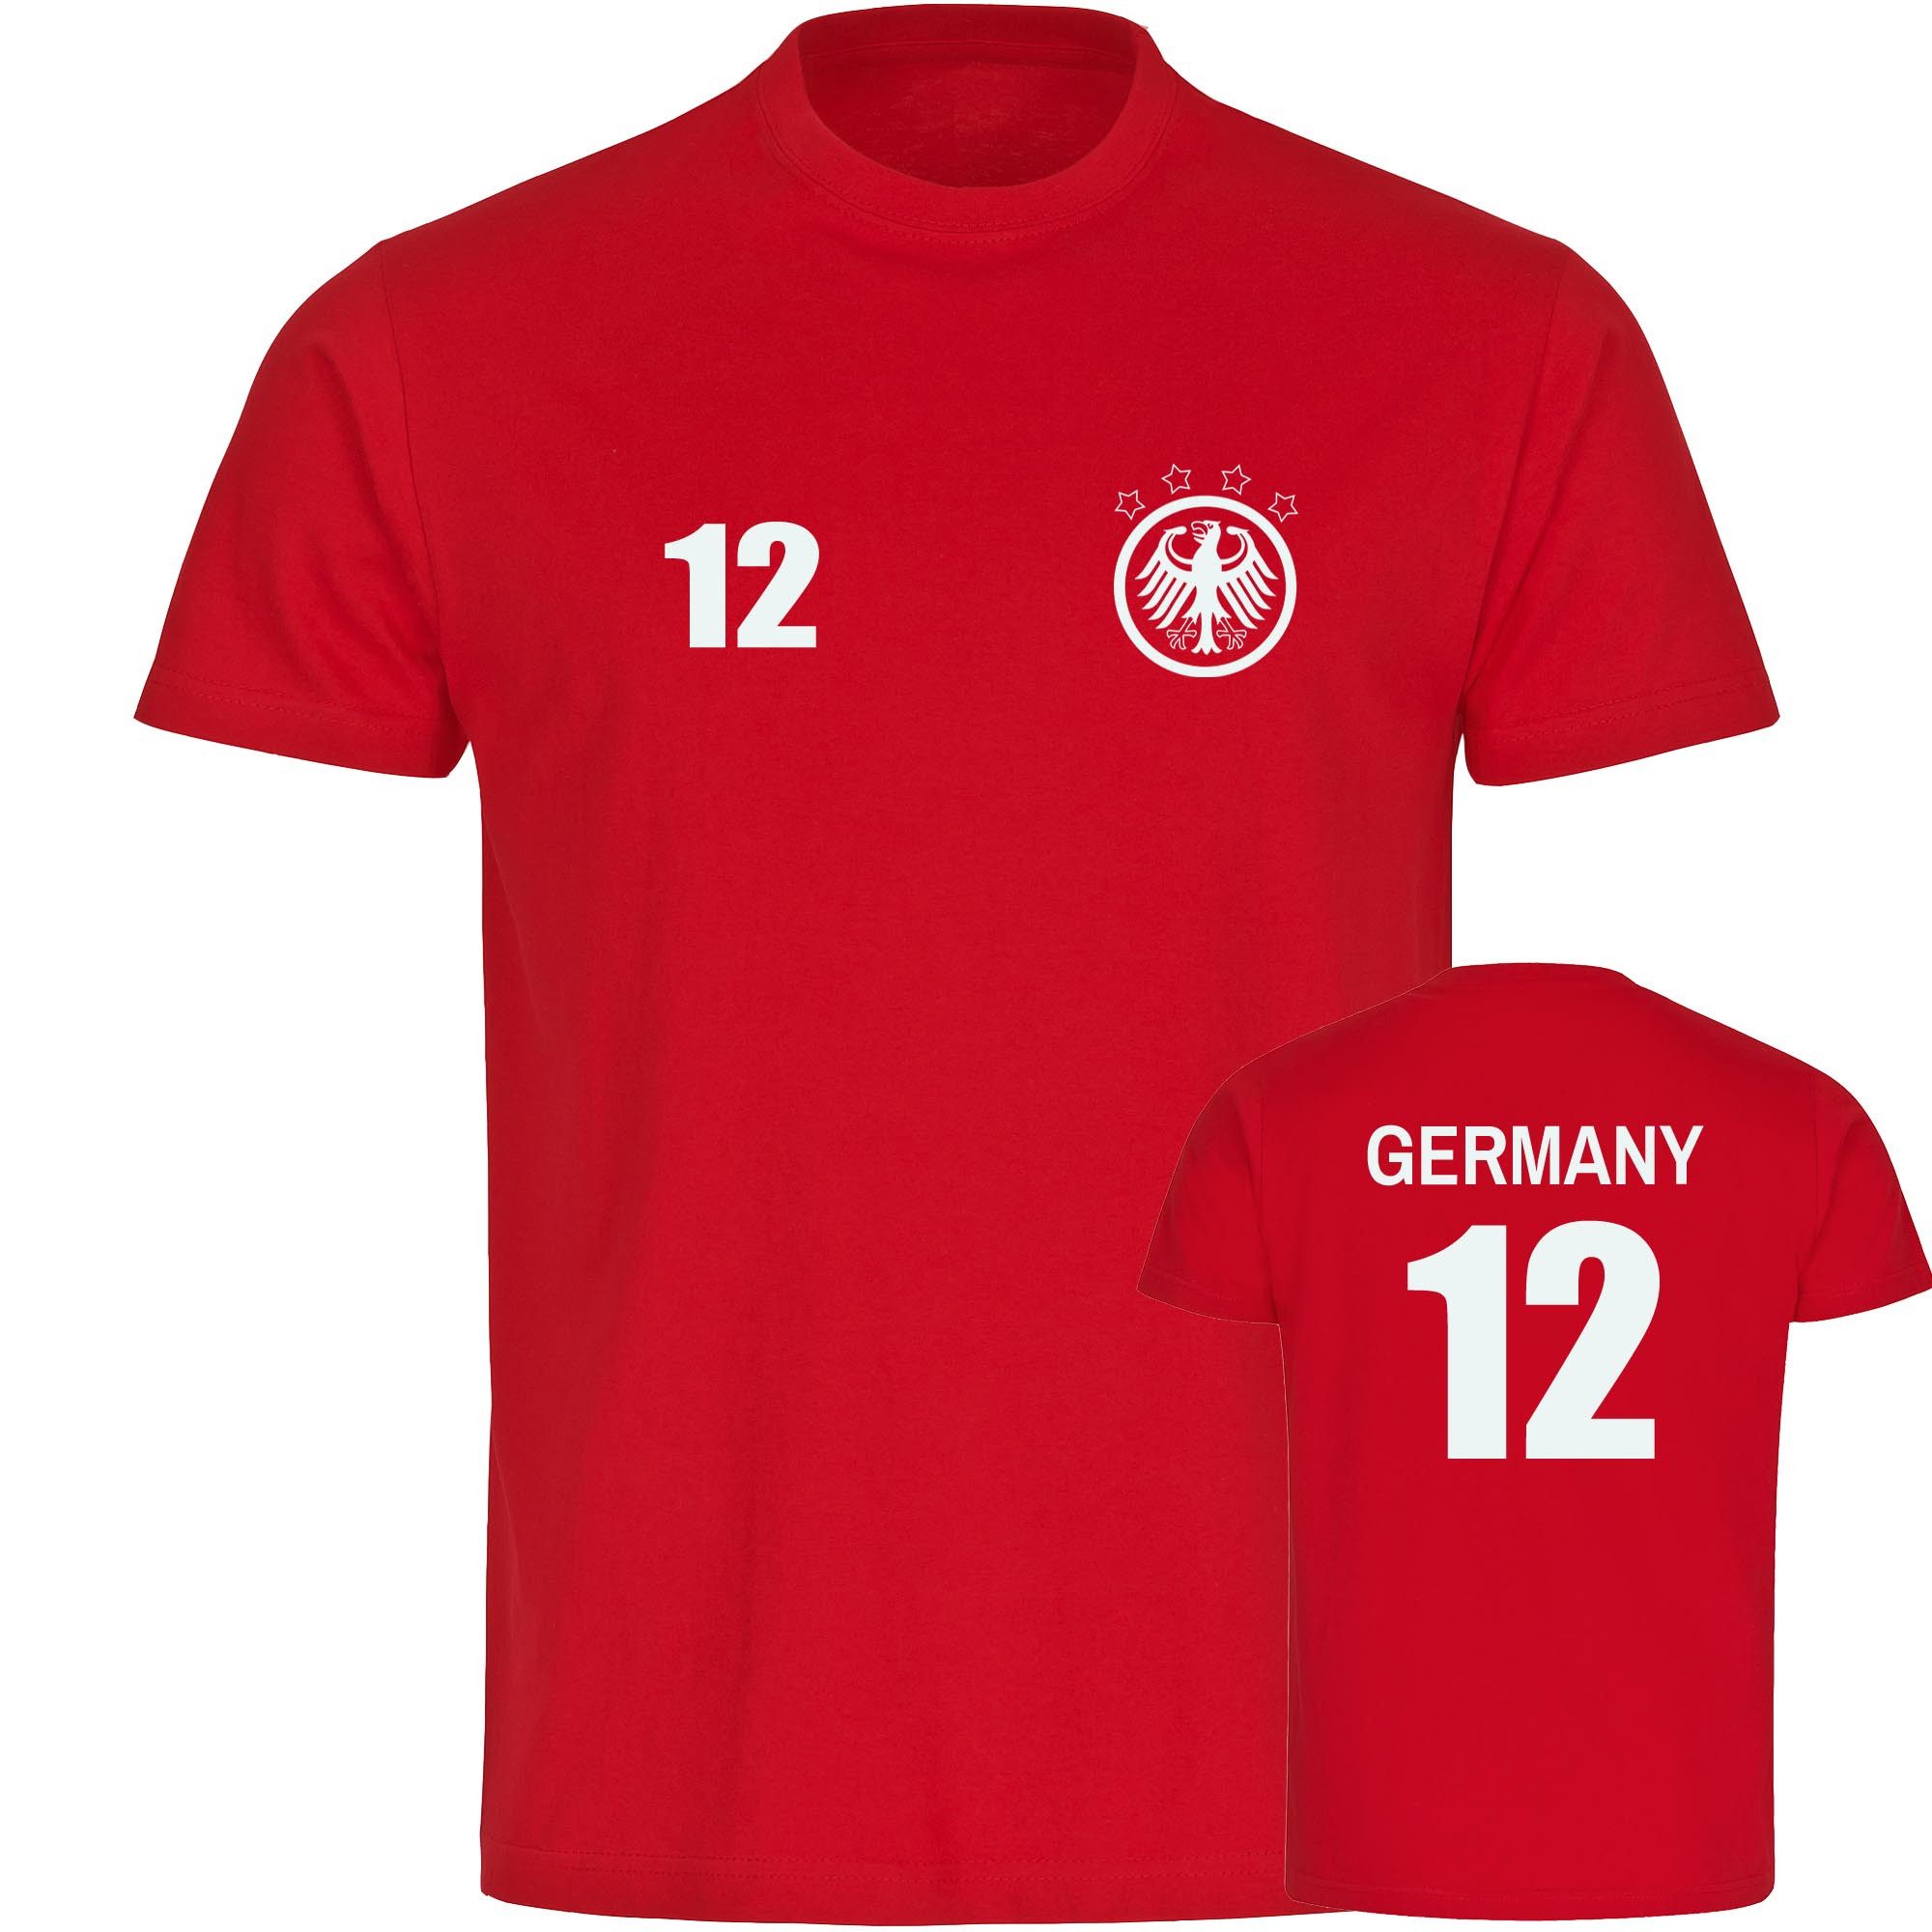 multifanshop T-Shirt Kinder Germany - Adler Retro Trikot 12 - Boy Girl